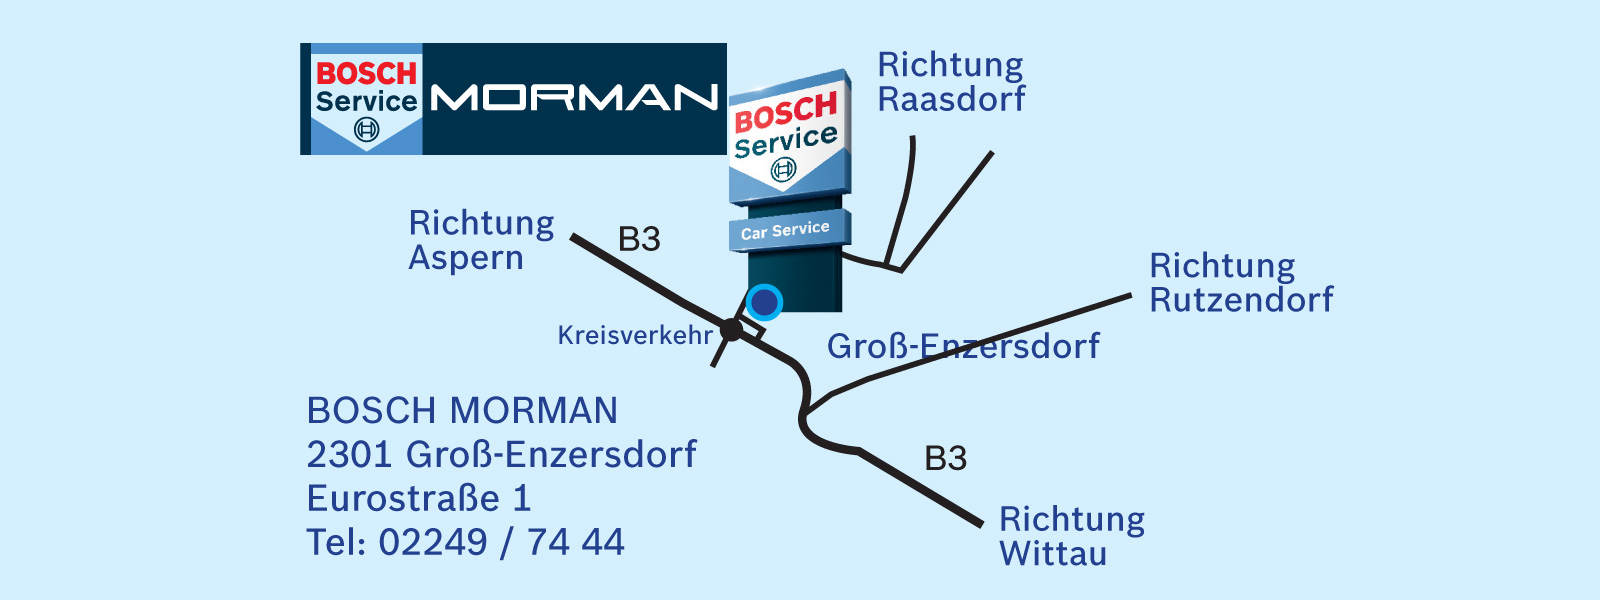 Bosch Morman Kfz-Werkstatt, 2301 Groß-Enzersdorf